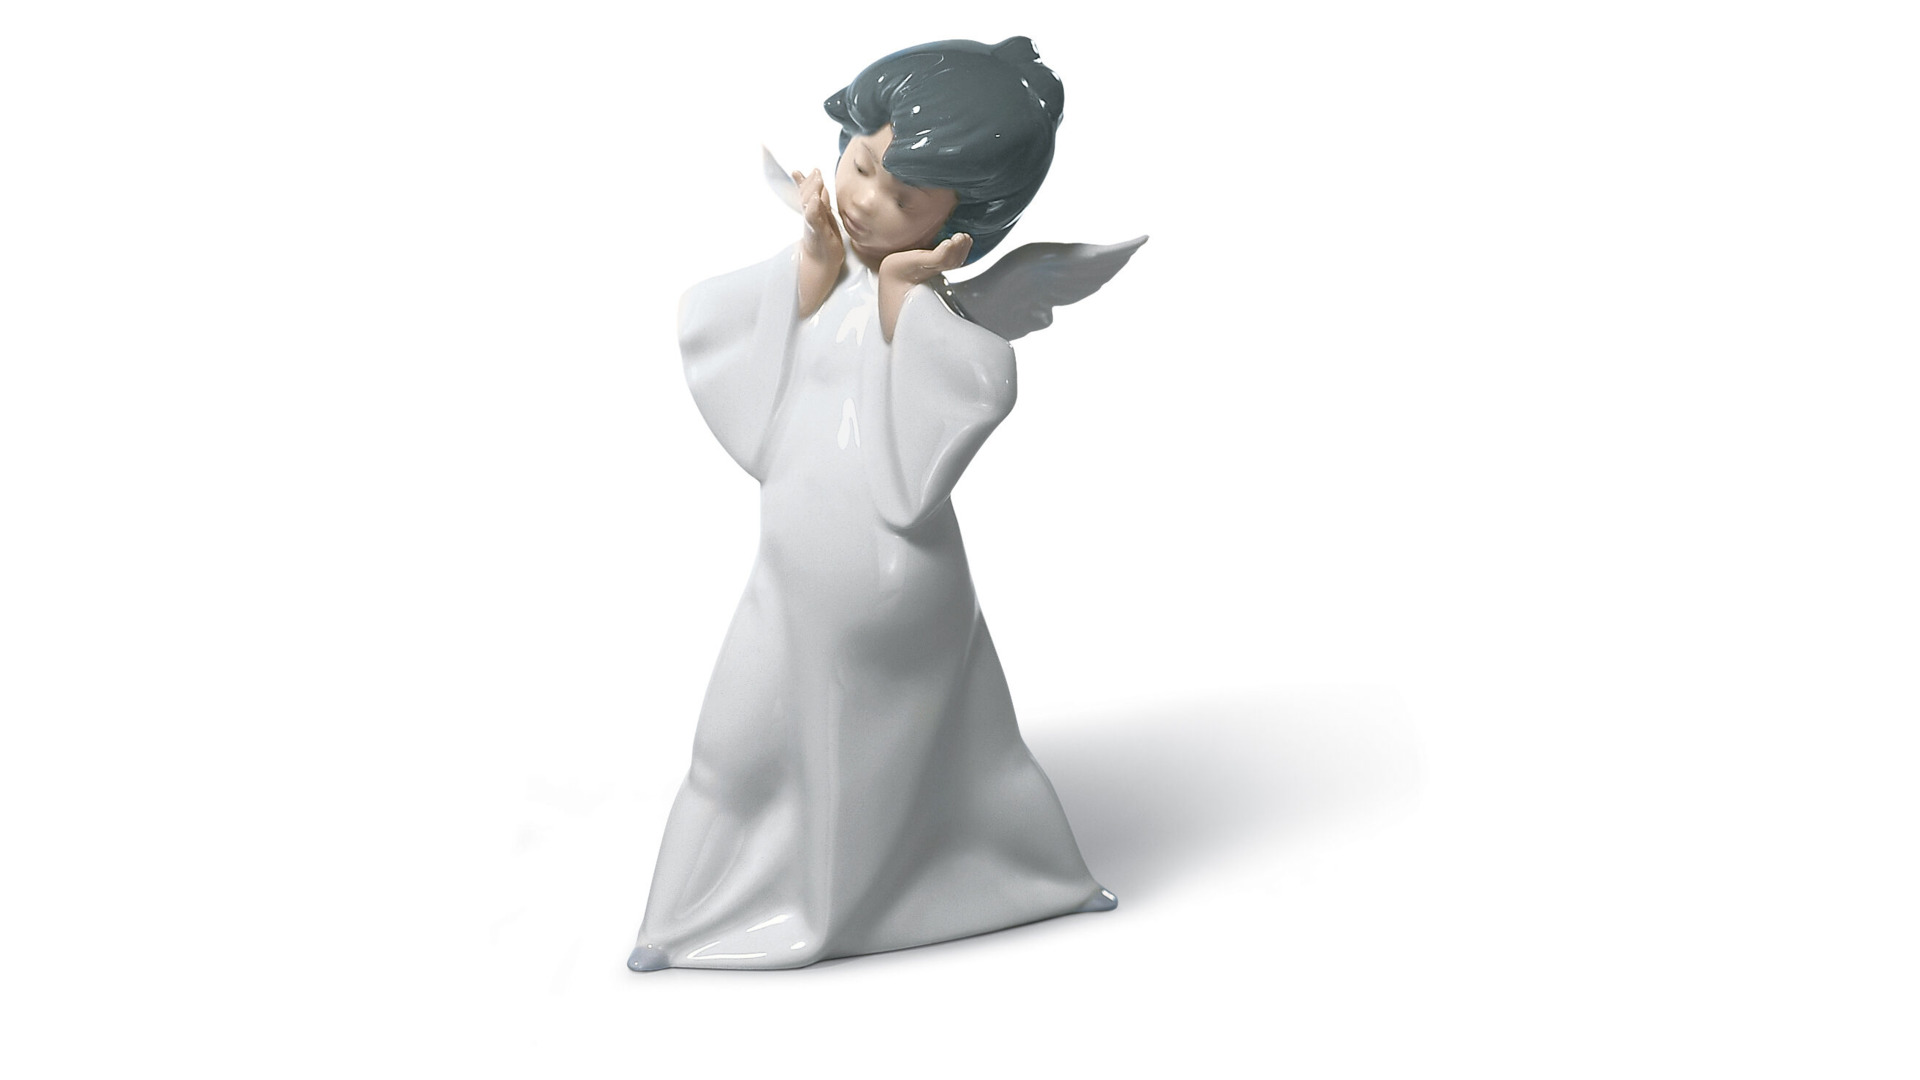 Фигурка Lladro Сочувствующий ангел 13x22 см, фарфор